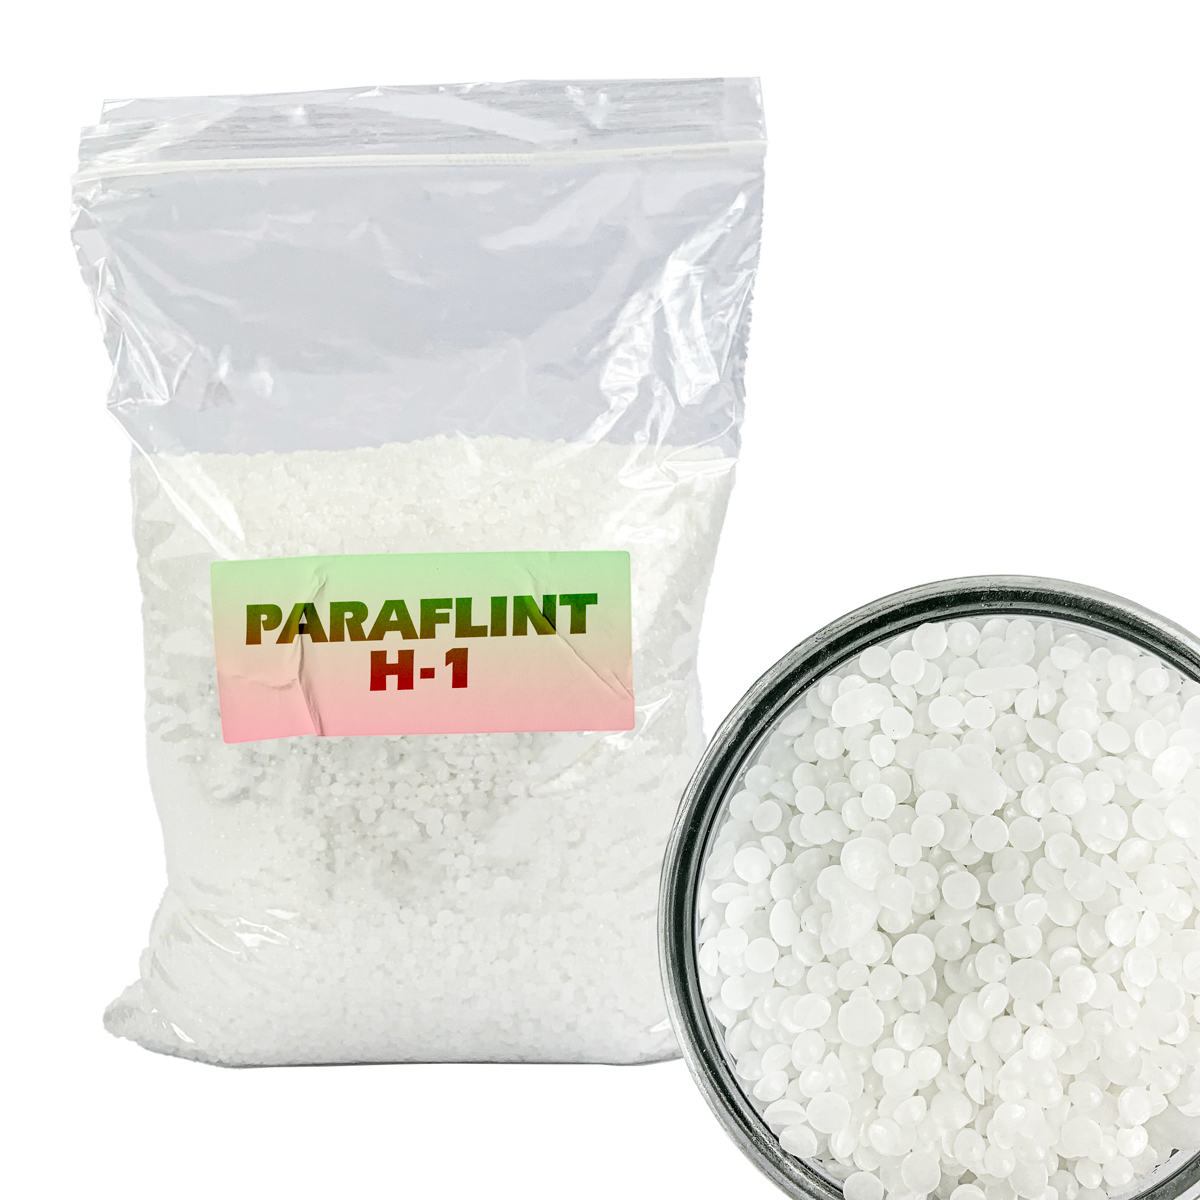 PARAFLINT H-1 Candle Wax Additive